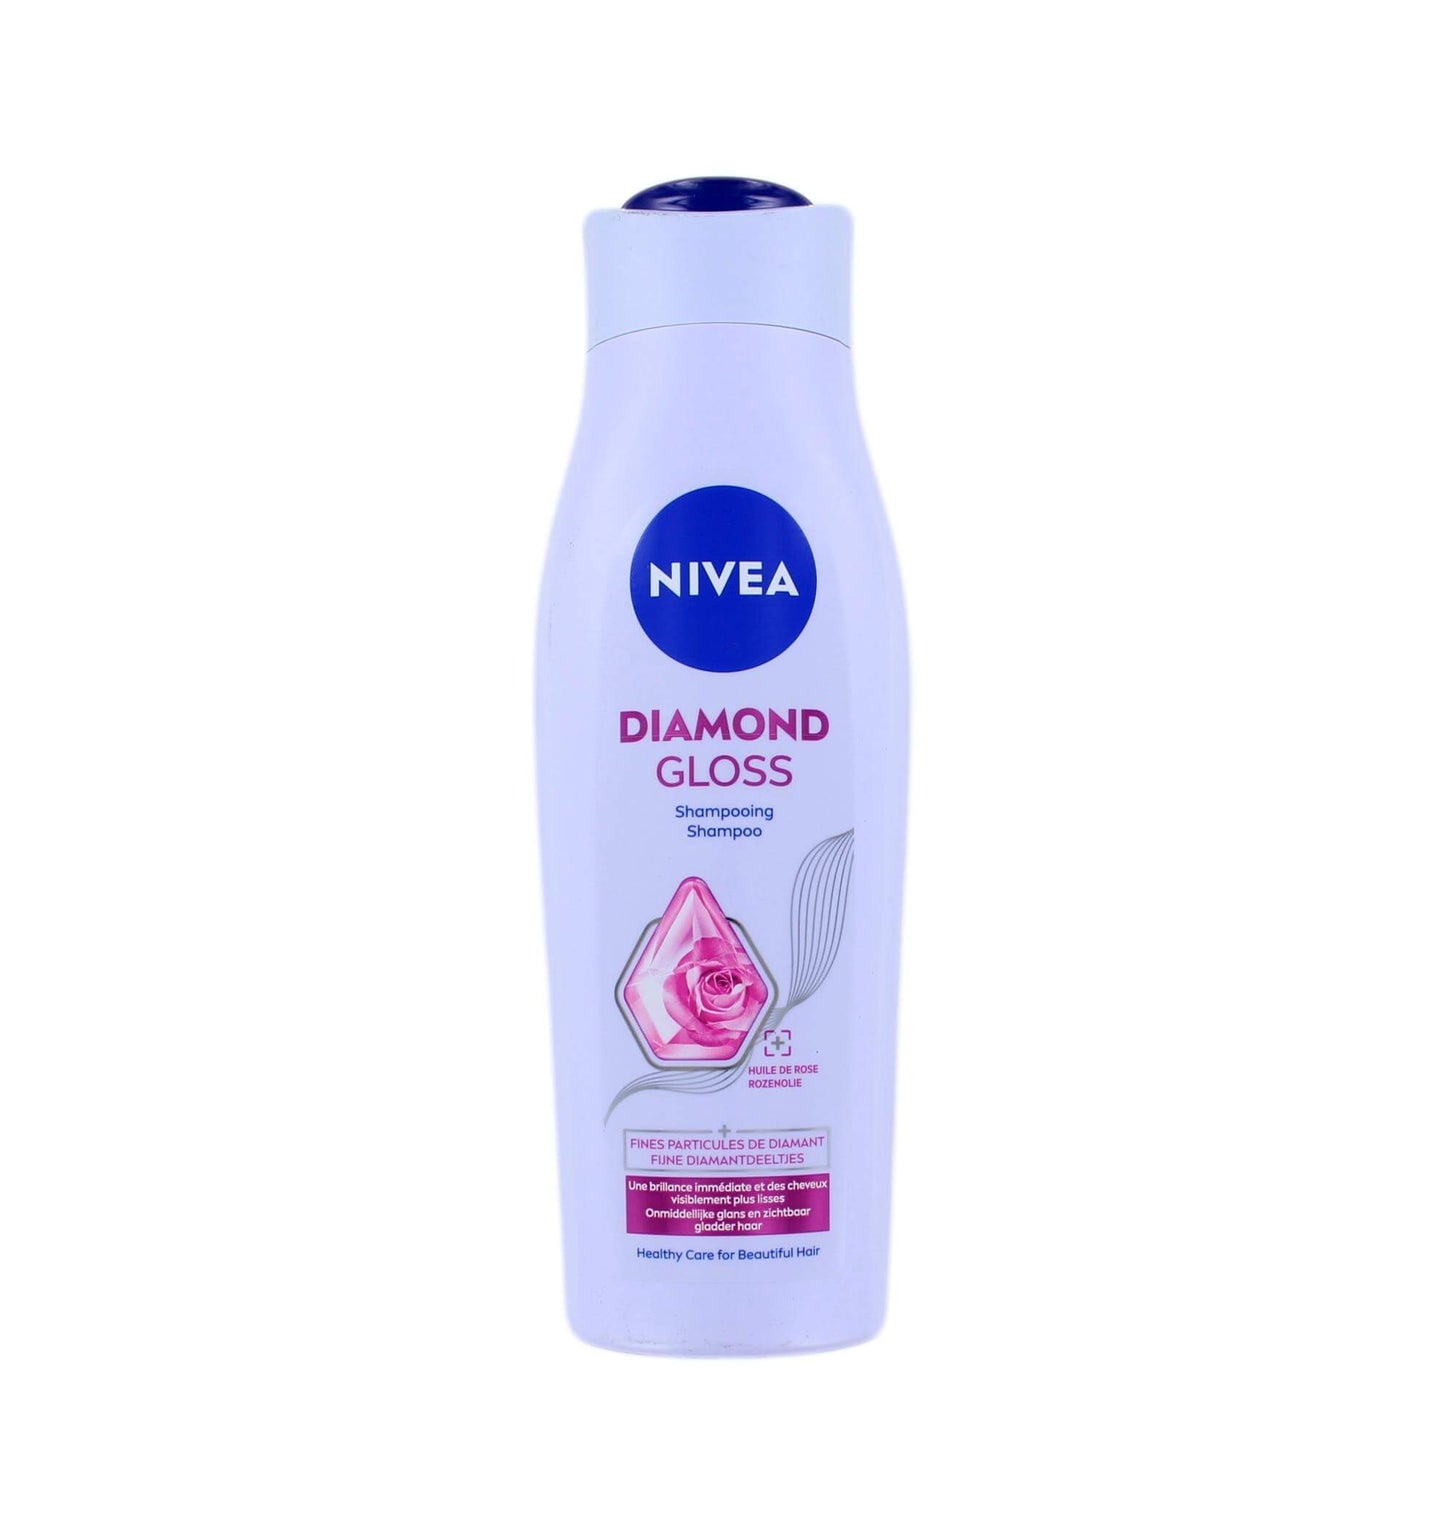 6x Nivea Diamond Gloss Shampoo 250ml